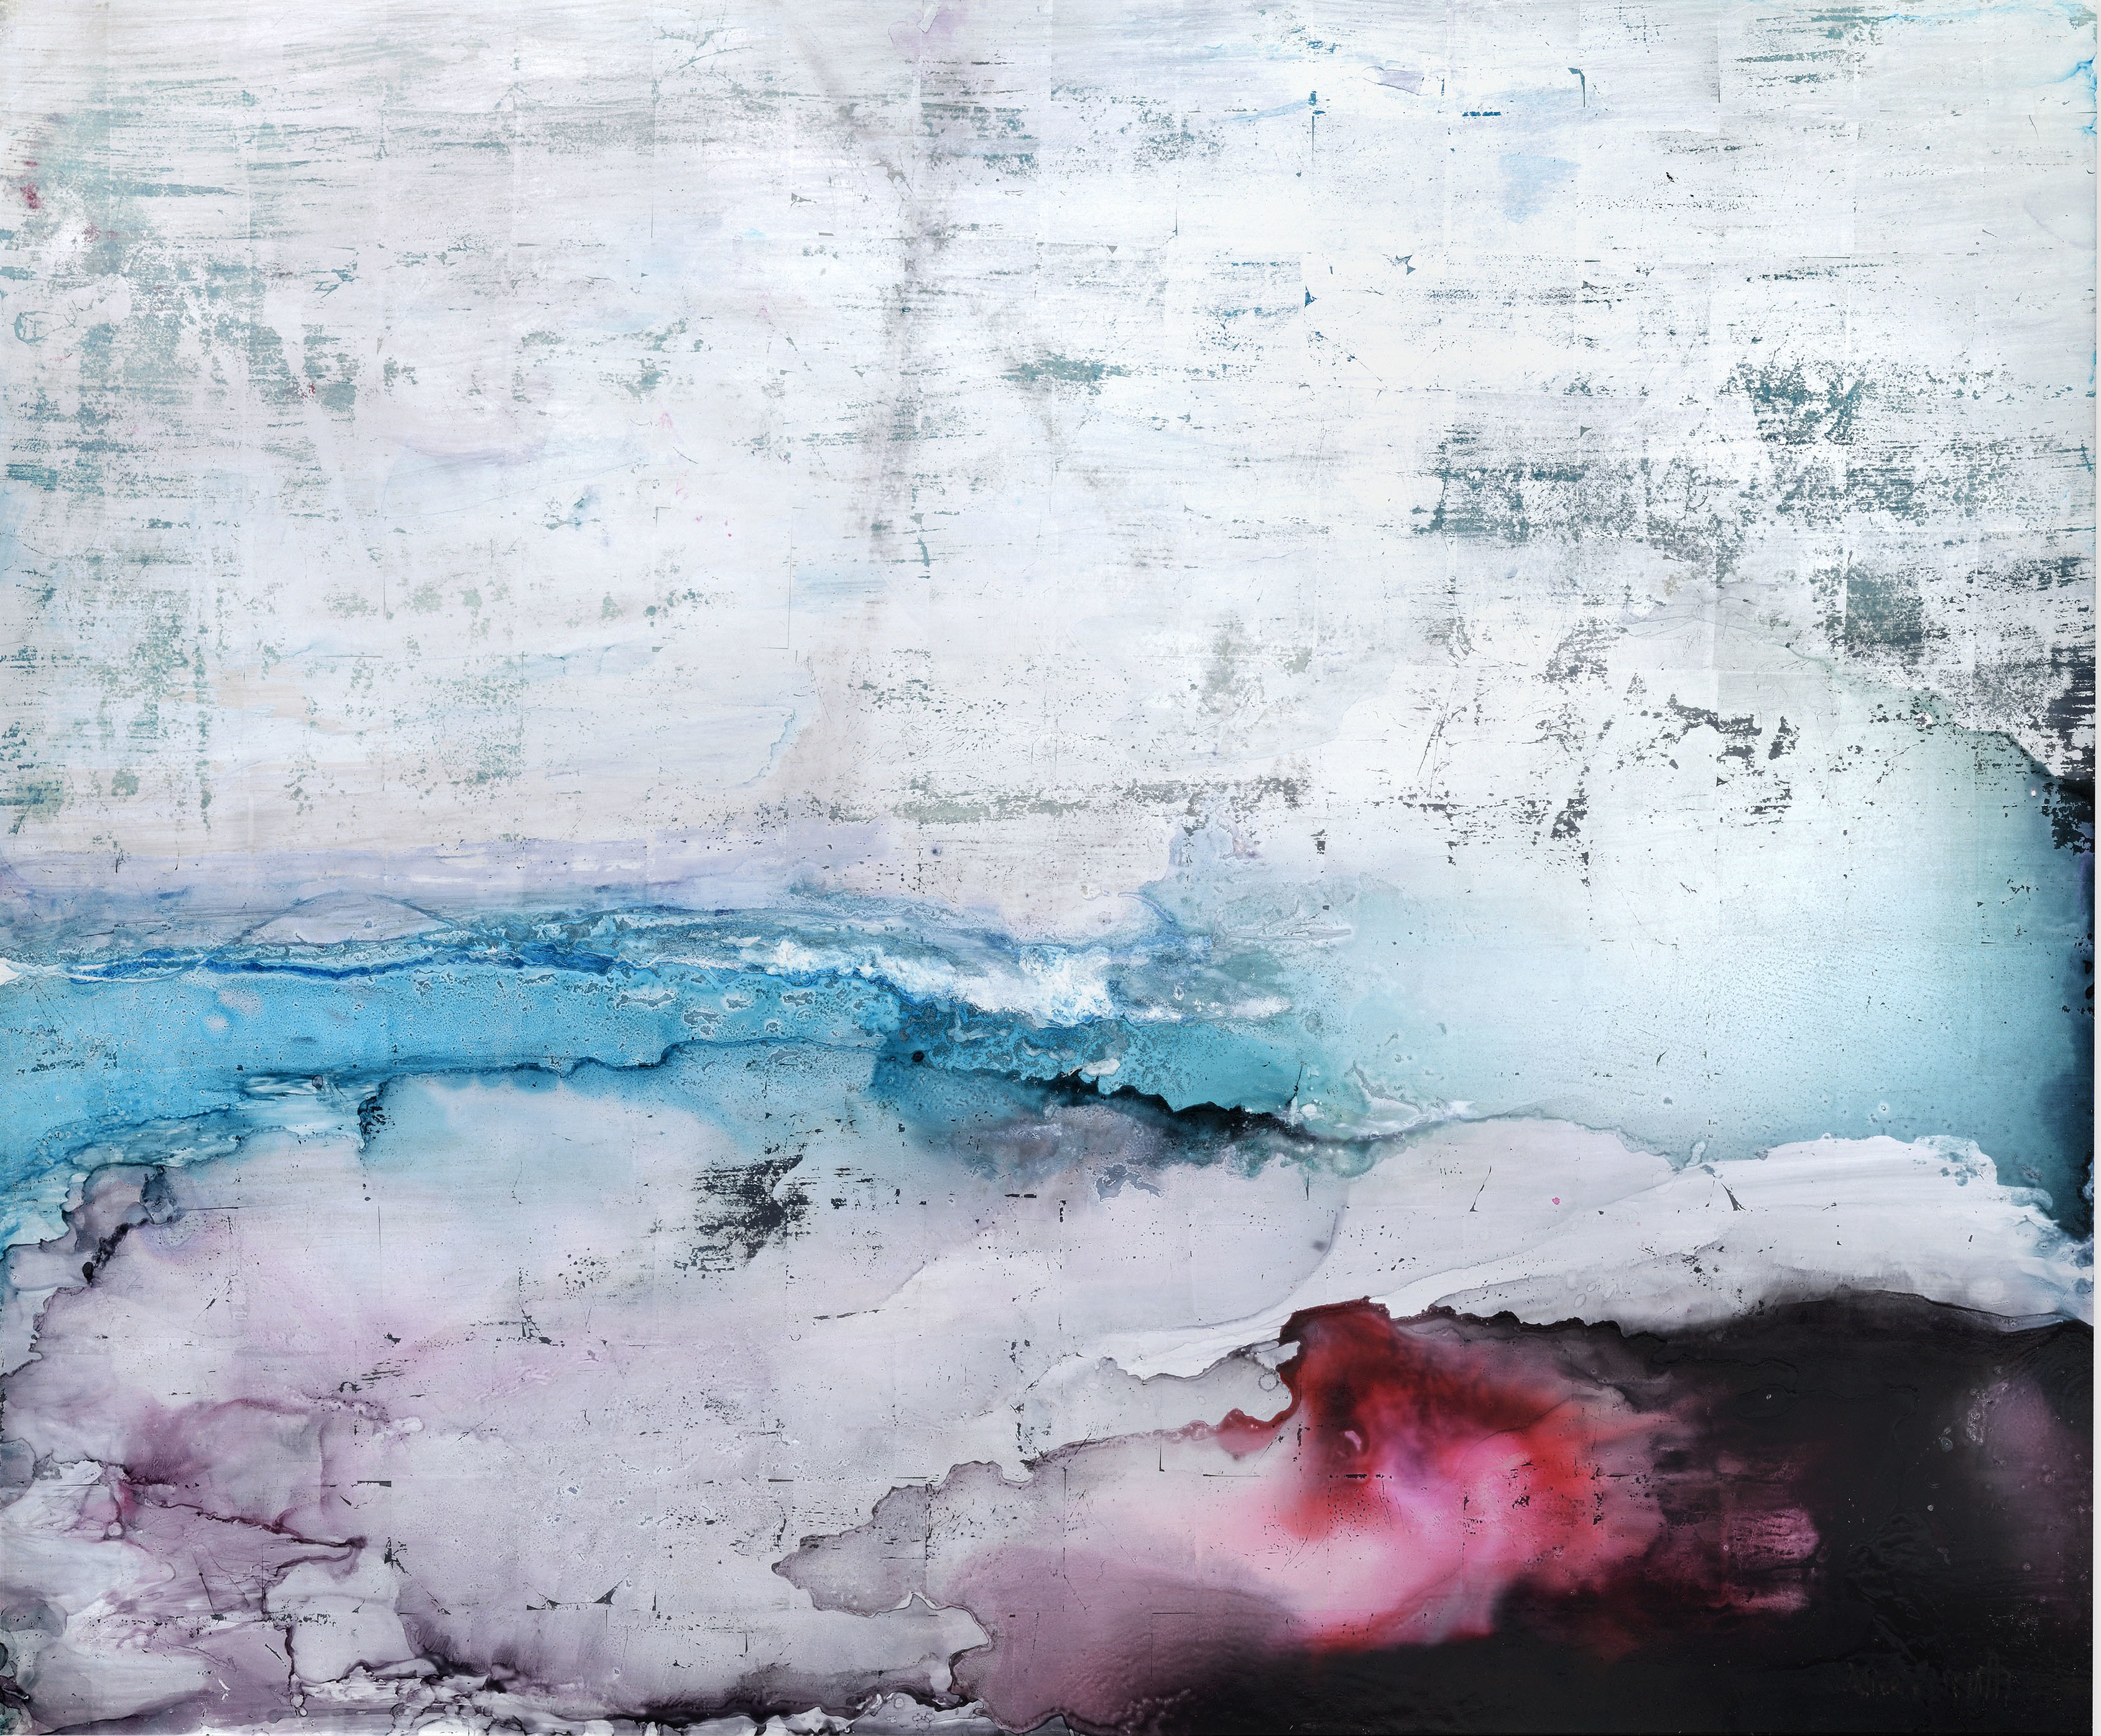 Ocean Wound 1 by Alice Cescatti